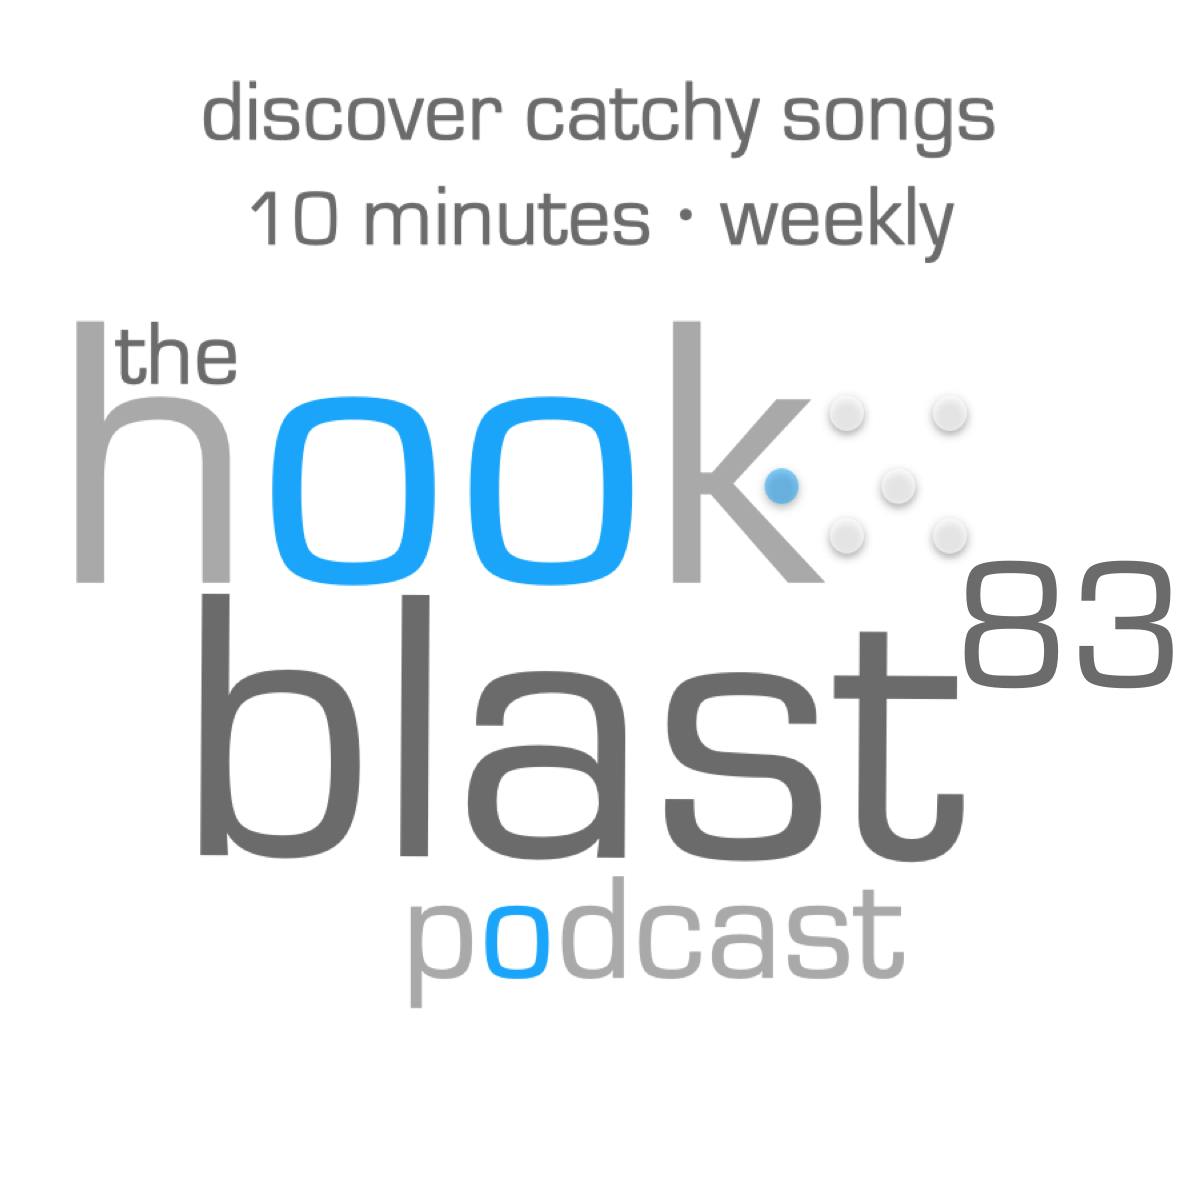 The Hookblast Podcast - Episode 83